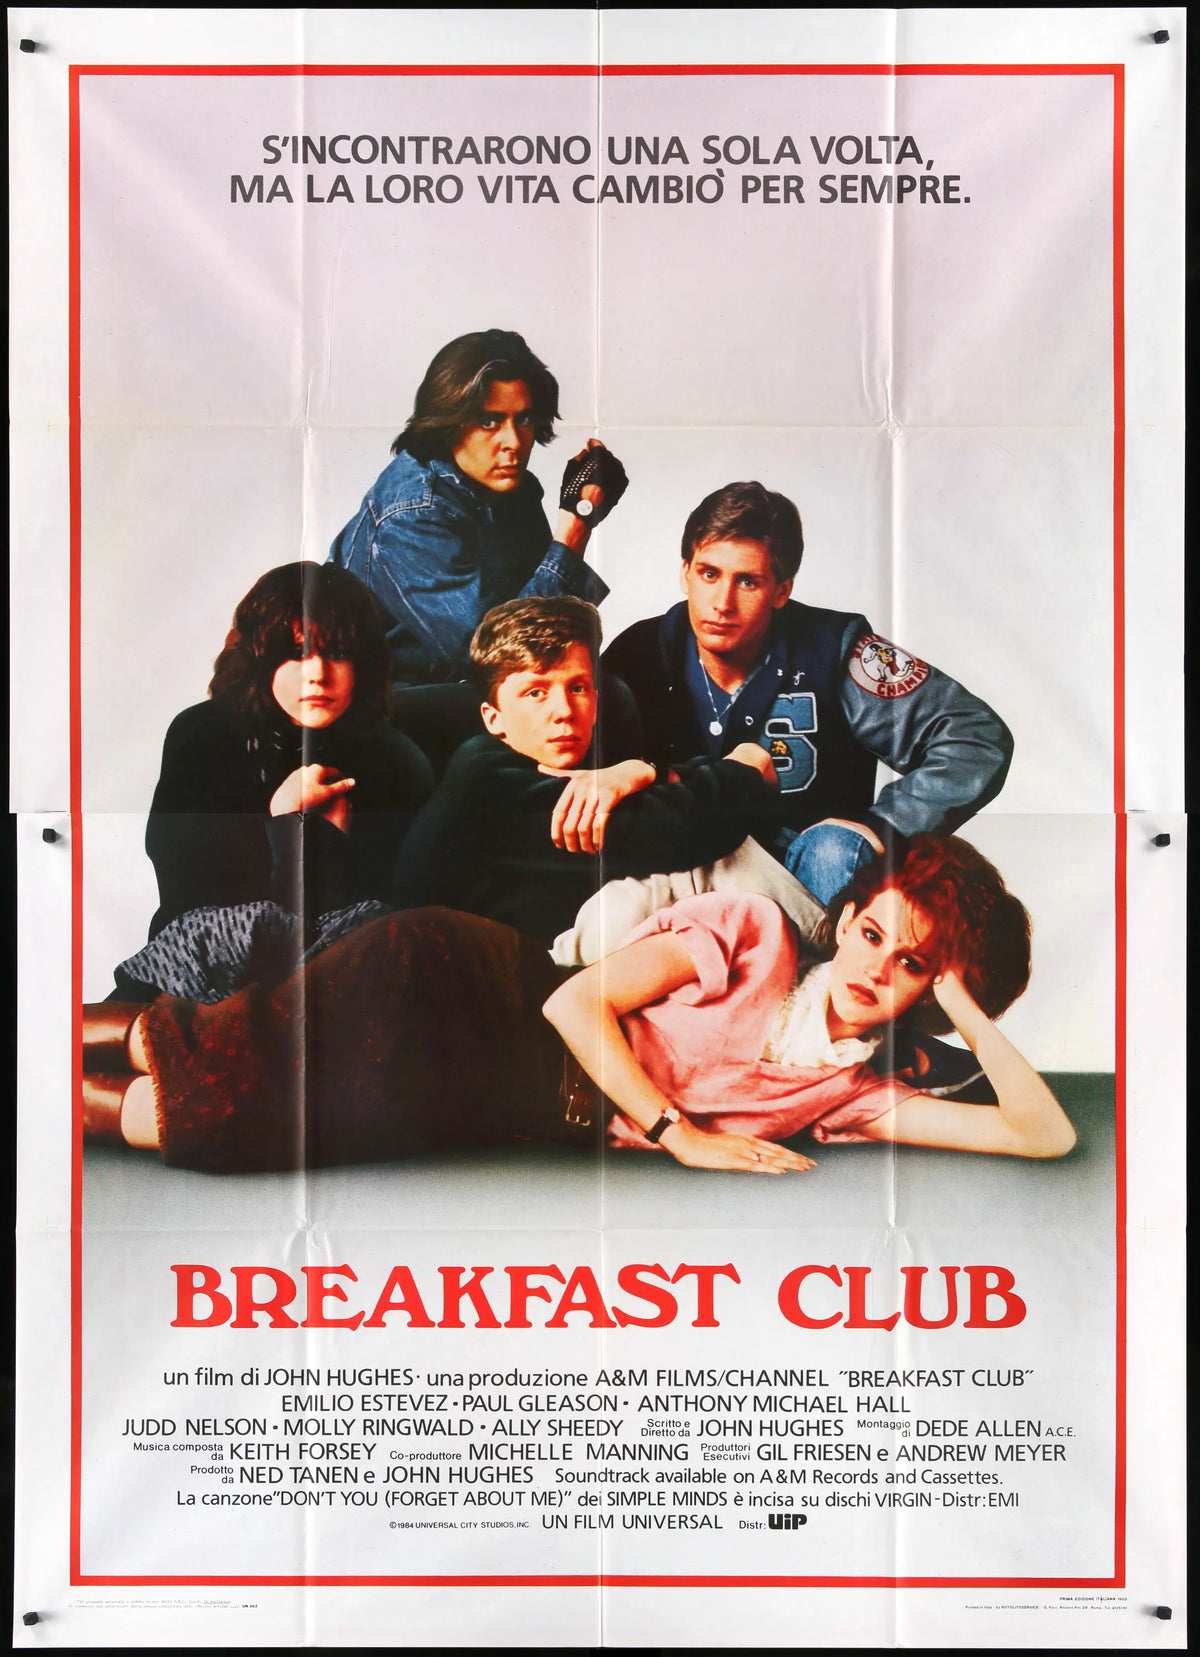 Breakfast Club (1985) original movie poster for sale at Original Film Art